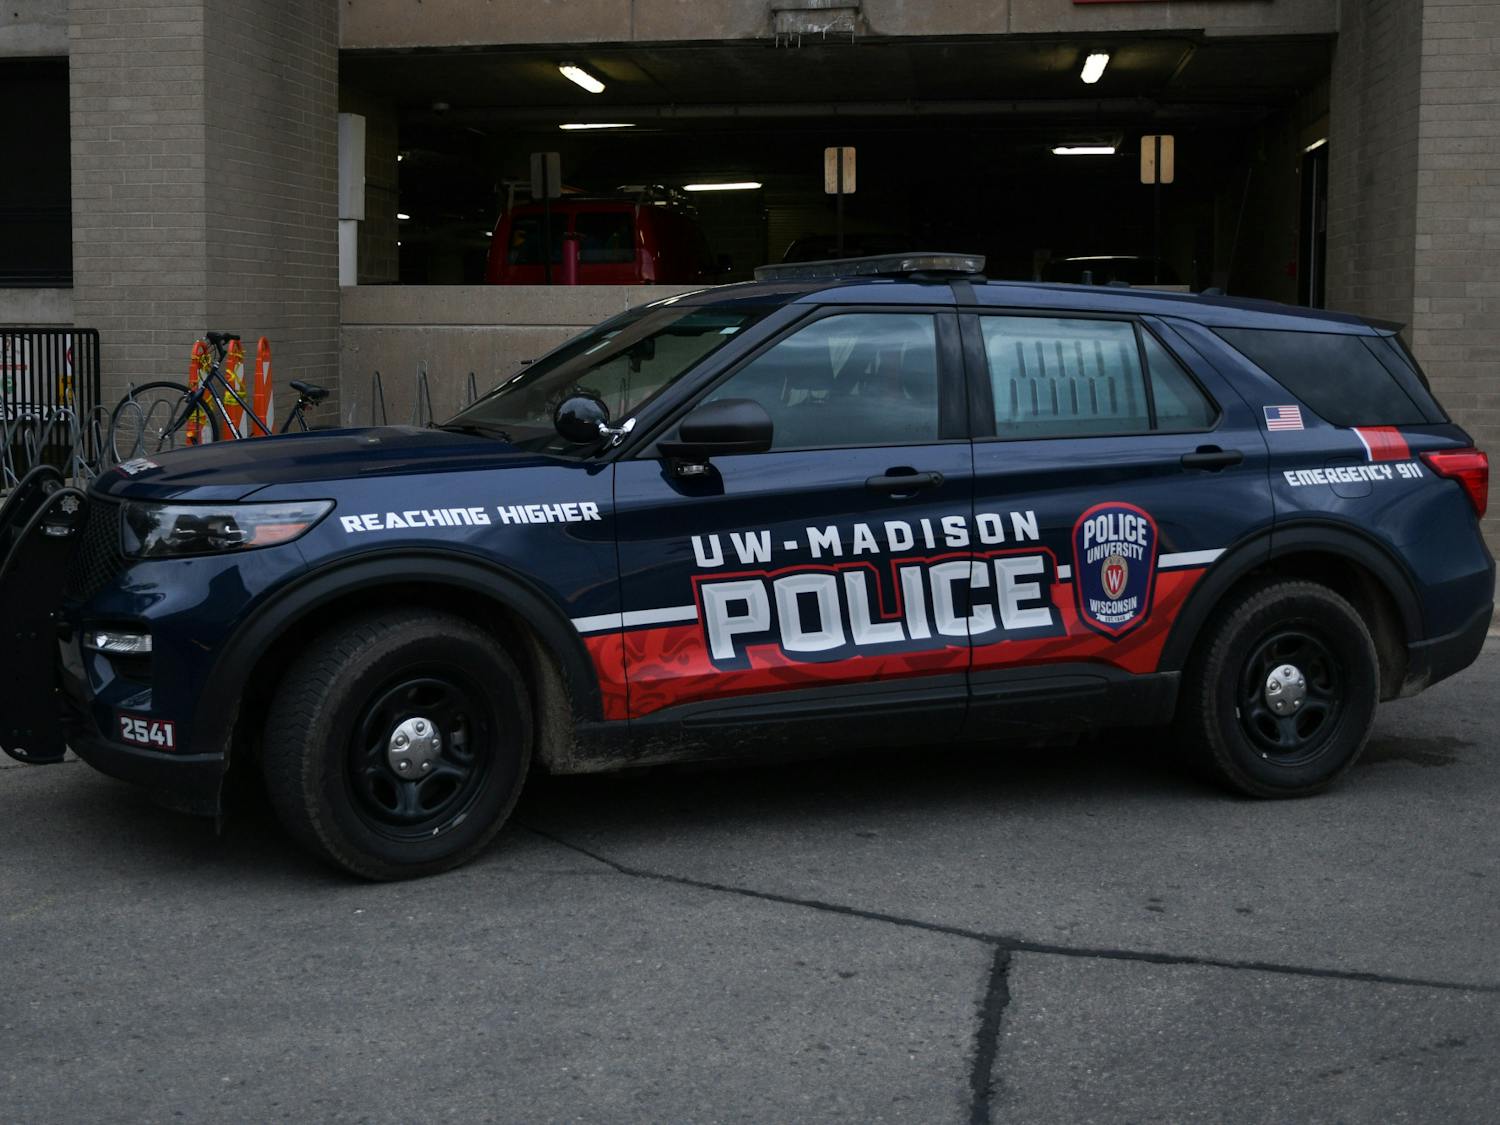 UWPD Cop Car Police Car UW-Madison Police